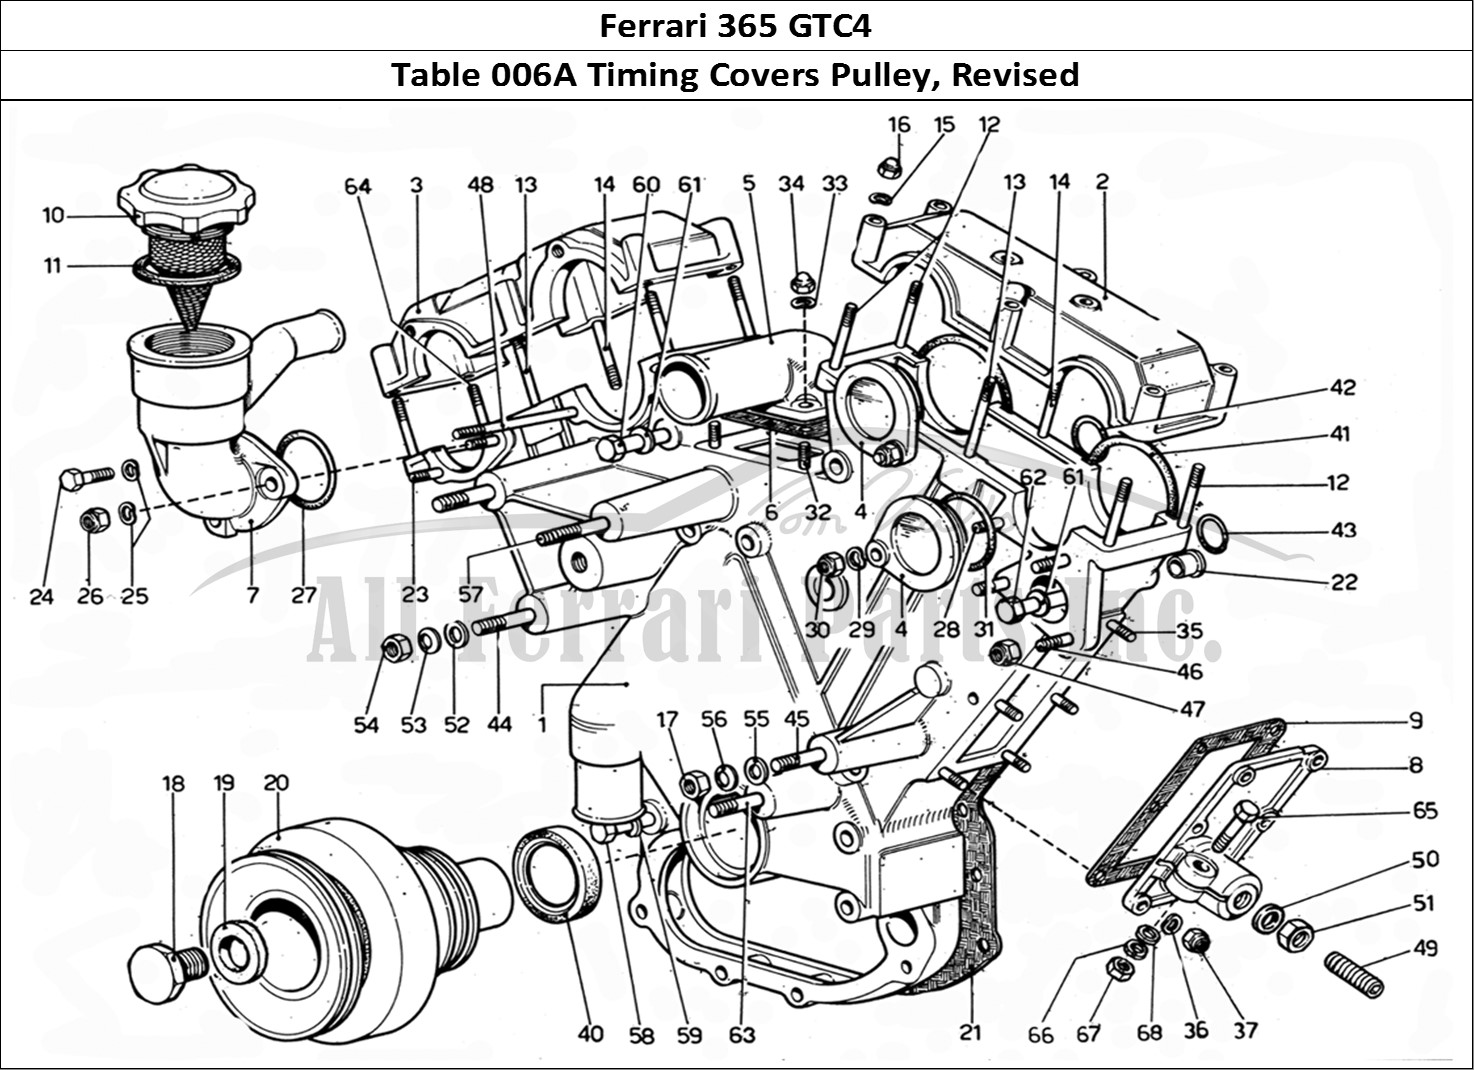 Ferrari Parts Ferrari 365 GTC4 (Mechanical) Page 006 Timing chest cover - Revi